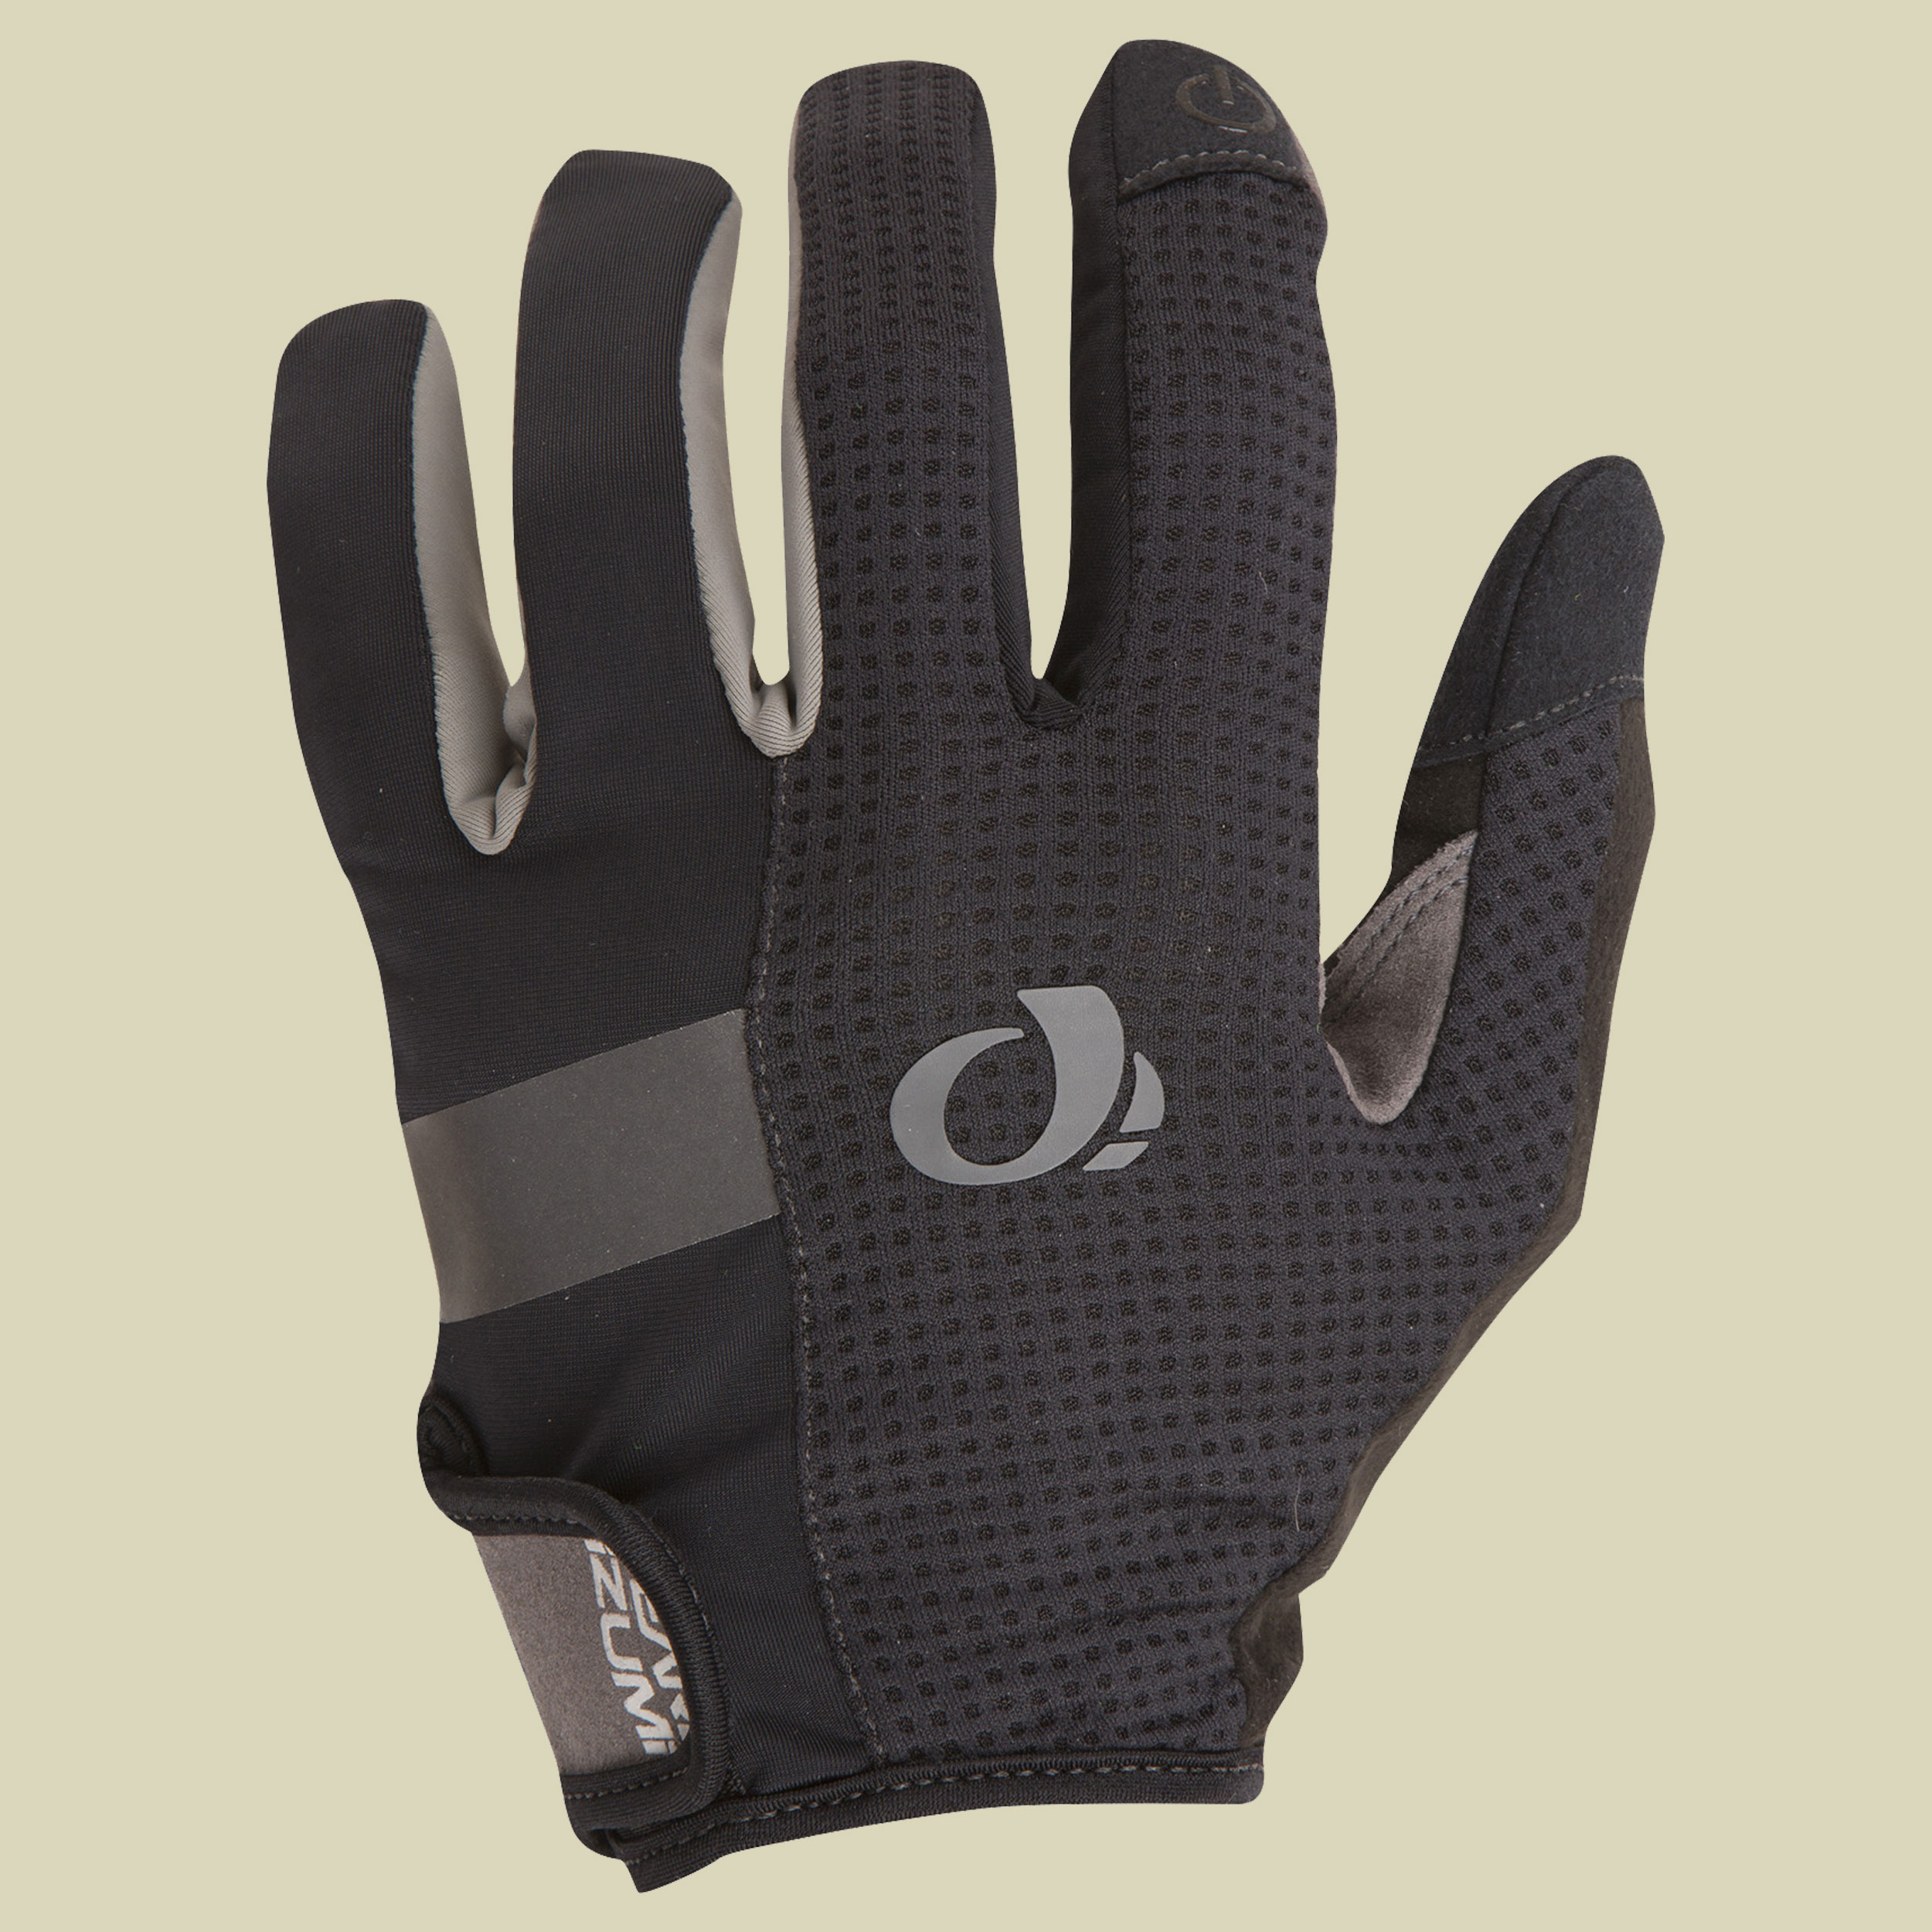 Elite Gel Full Finger Glove Größe XL Farbe black